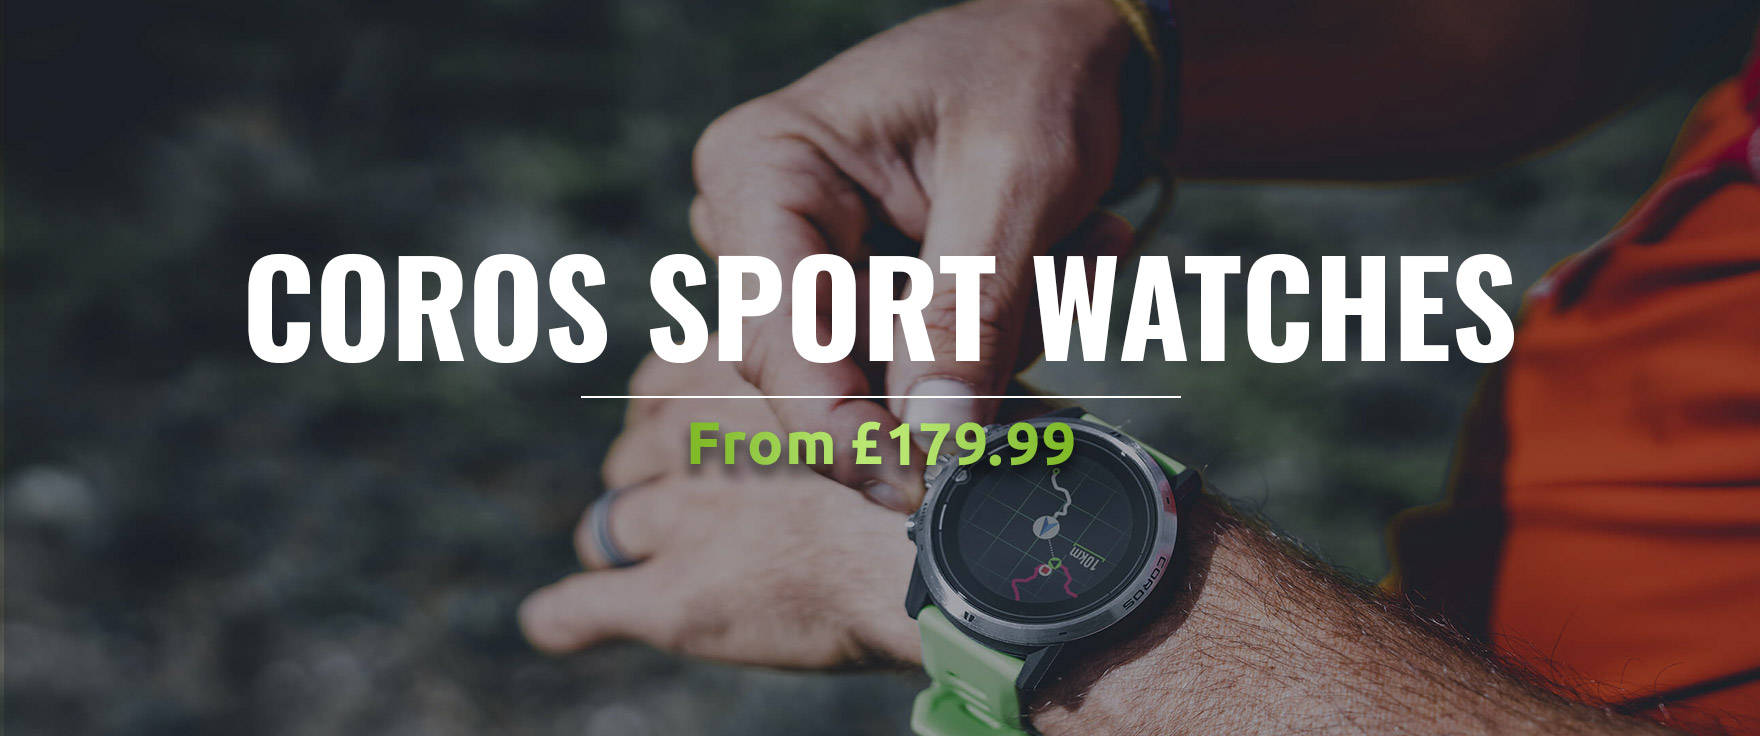 Coros Sport Watches